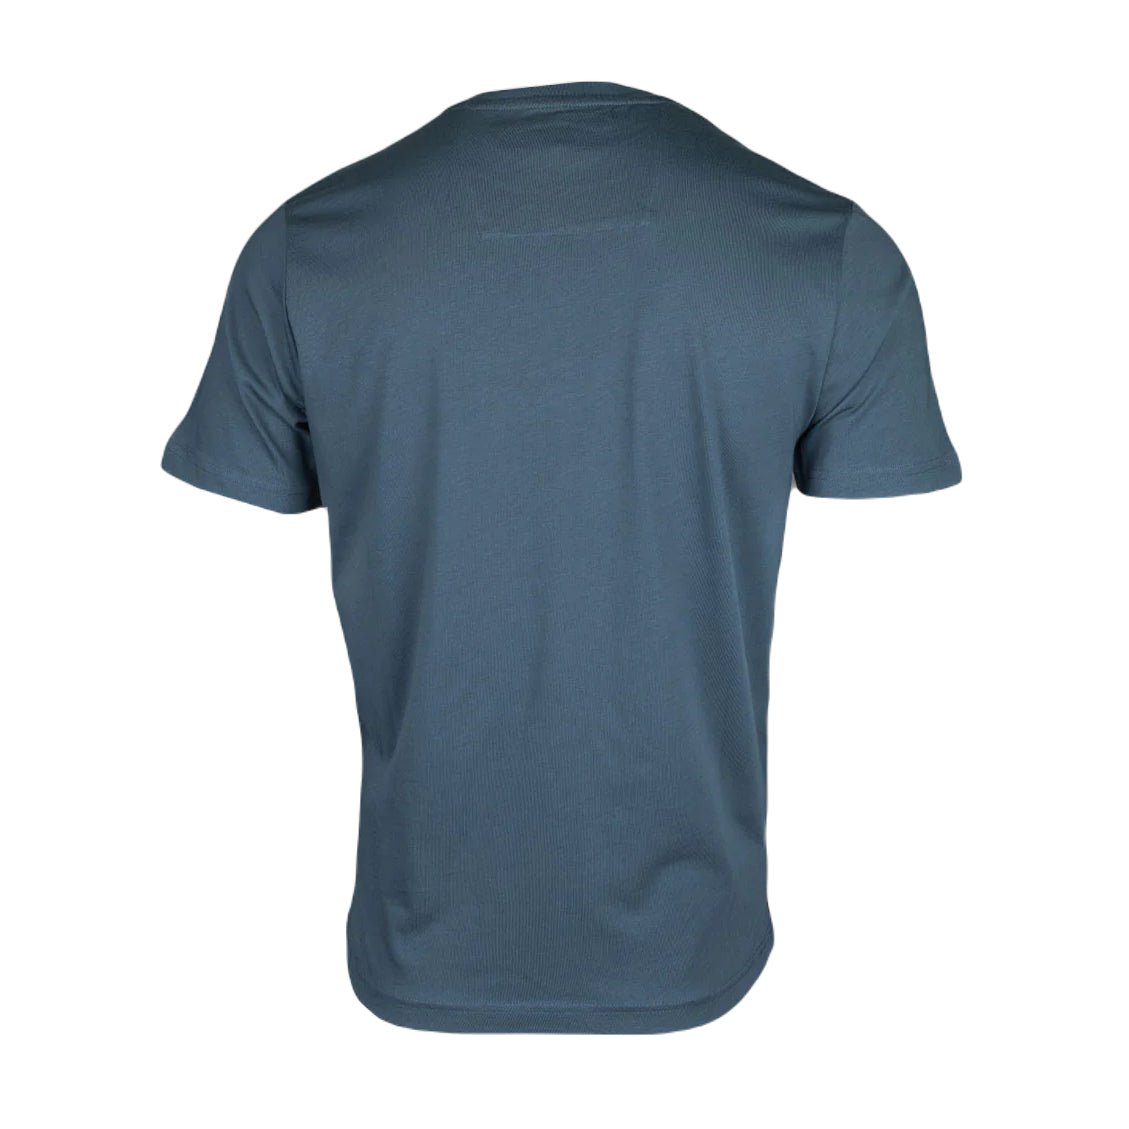 Marshall Artist Injection T-Shirt - Slate Blue - Escape Menswear